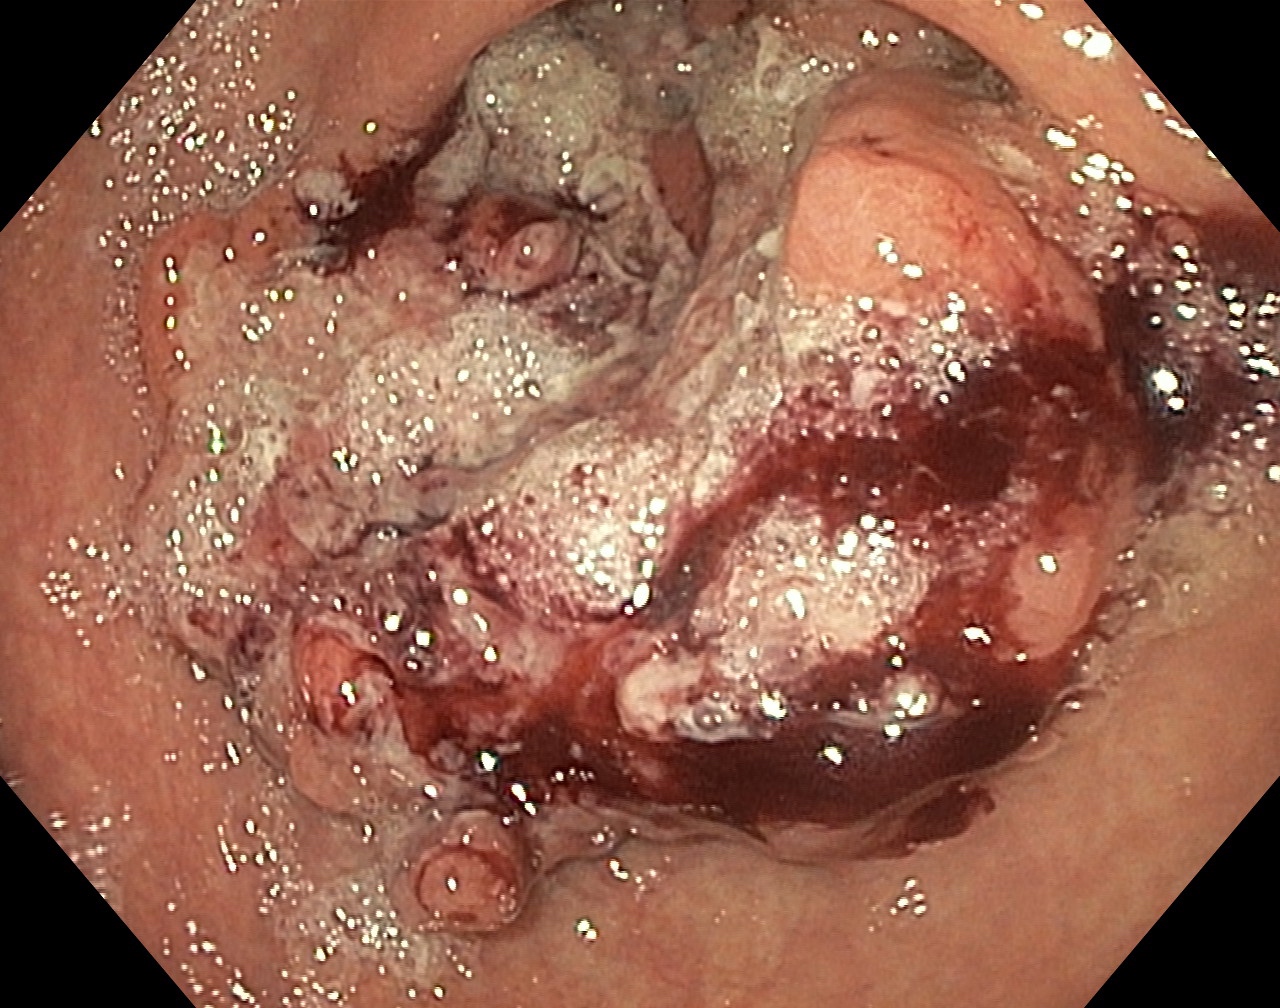 Hemorrhagic gastric mass